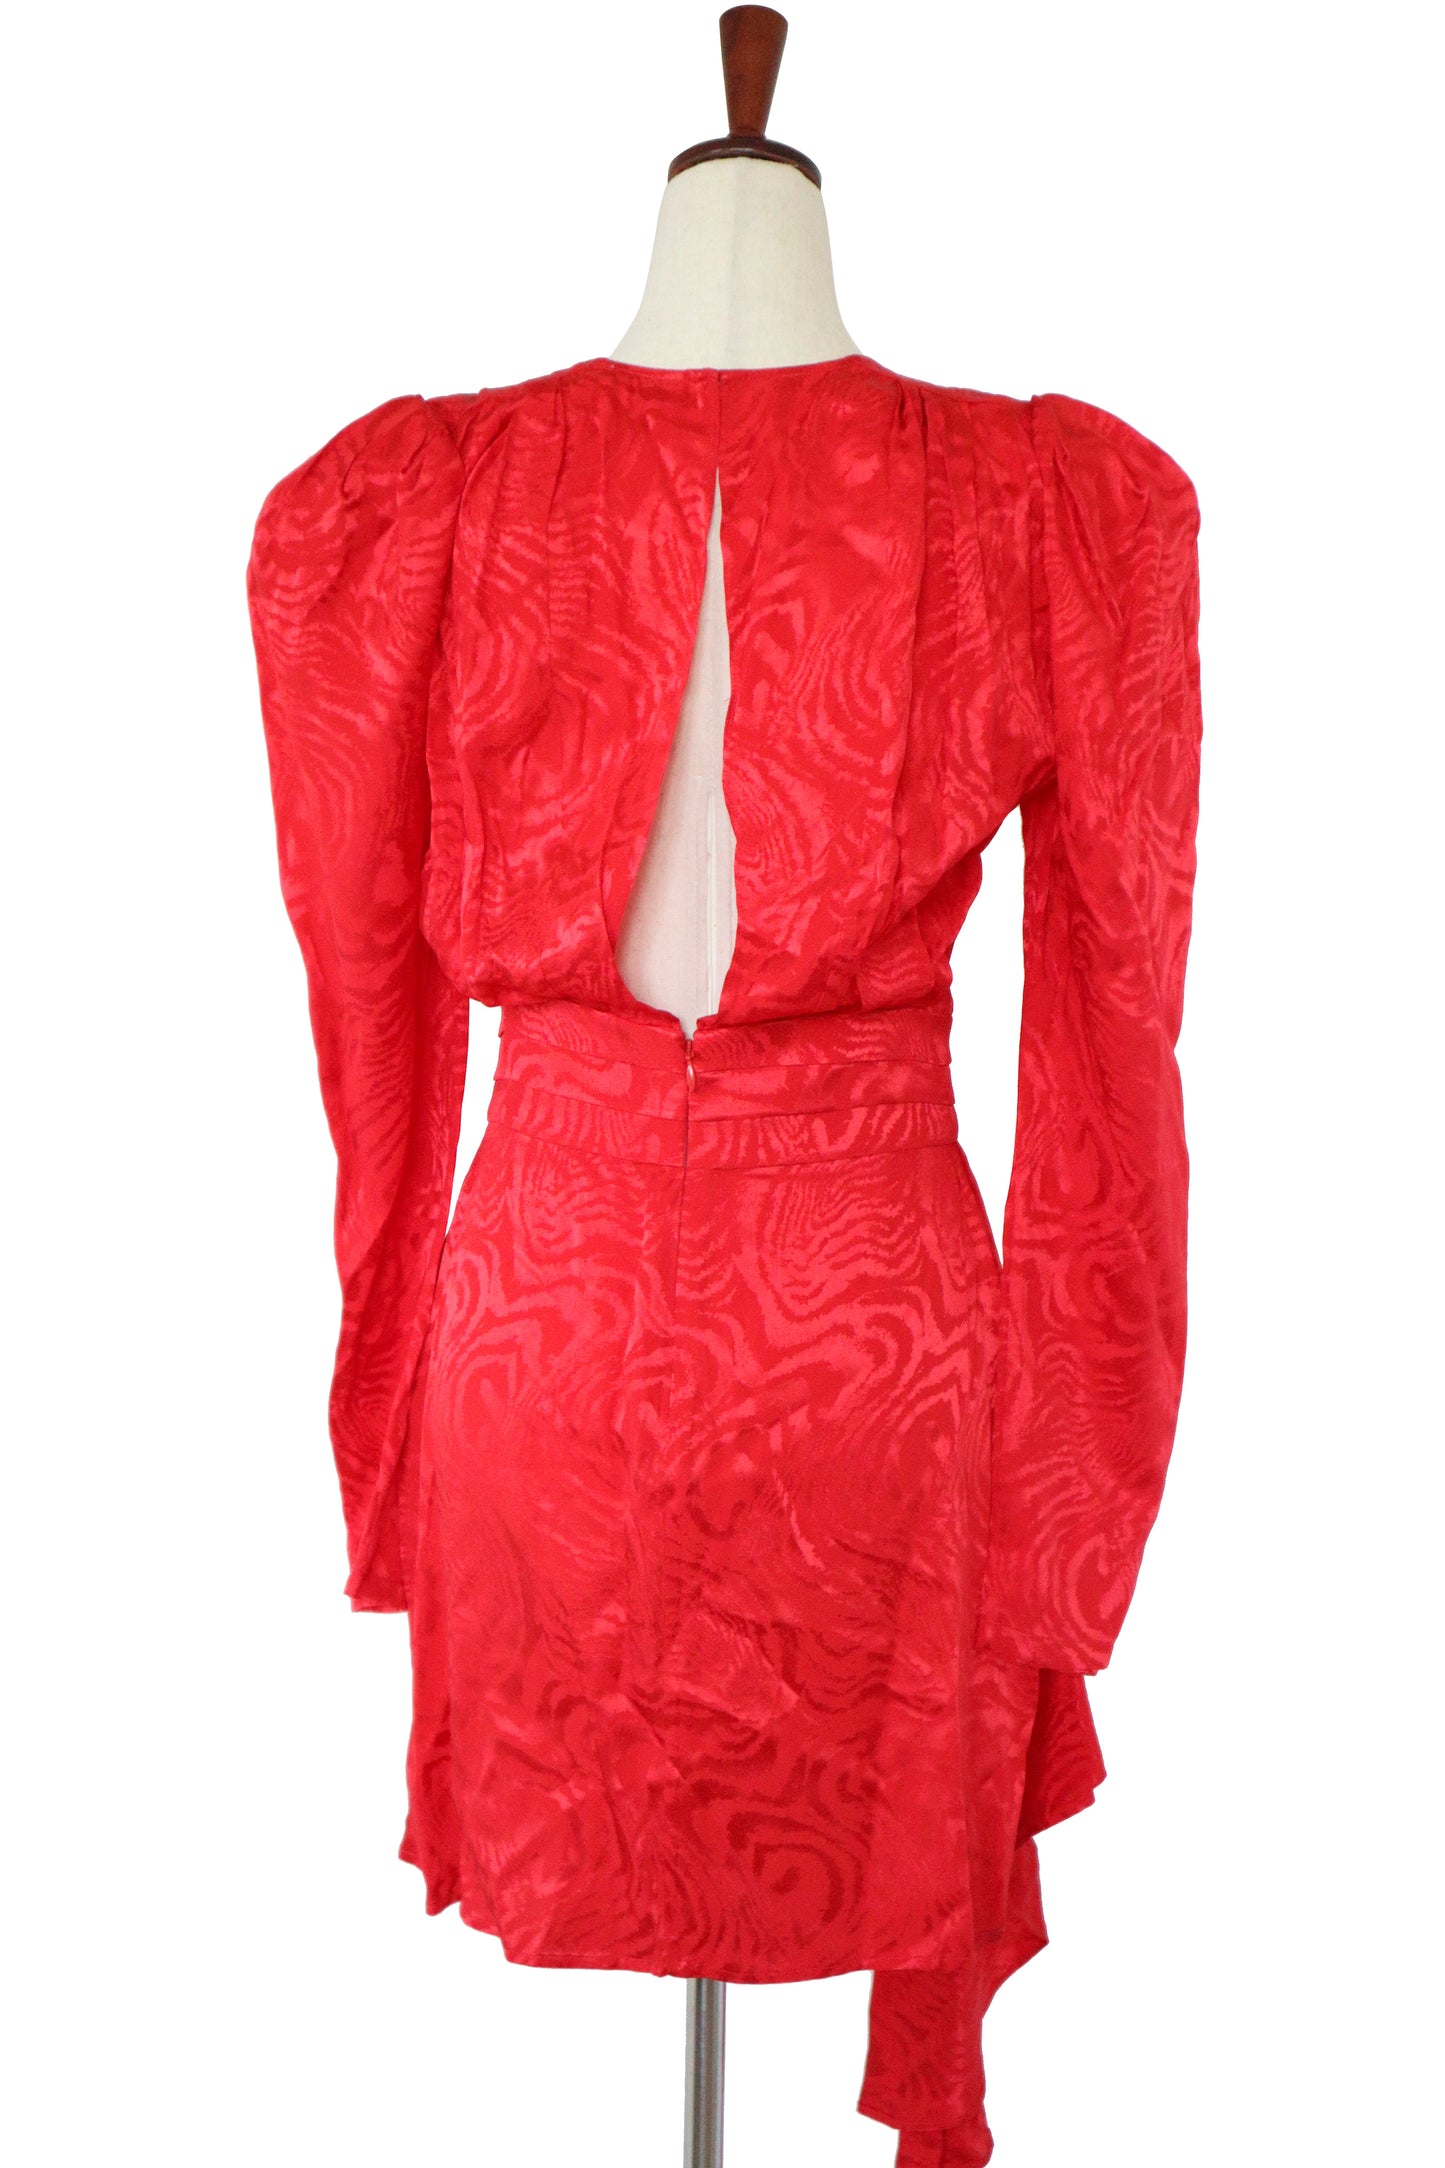 RONNY KOBO - Red Long Sleeve Mini Dress - Size M